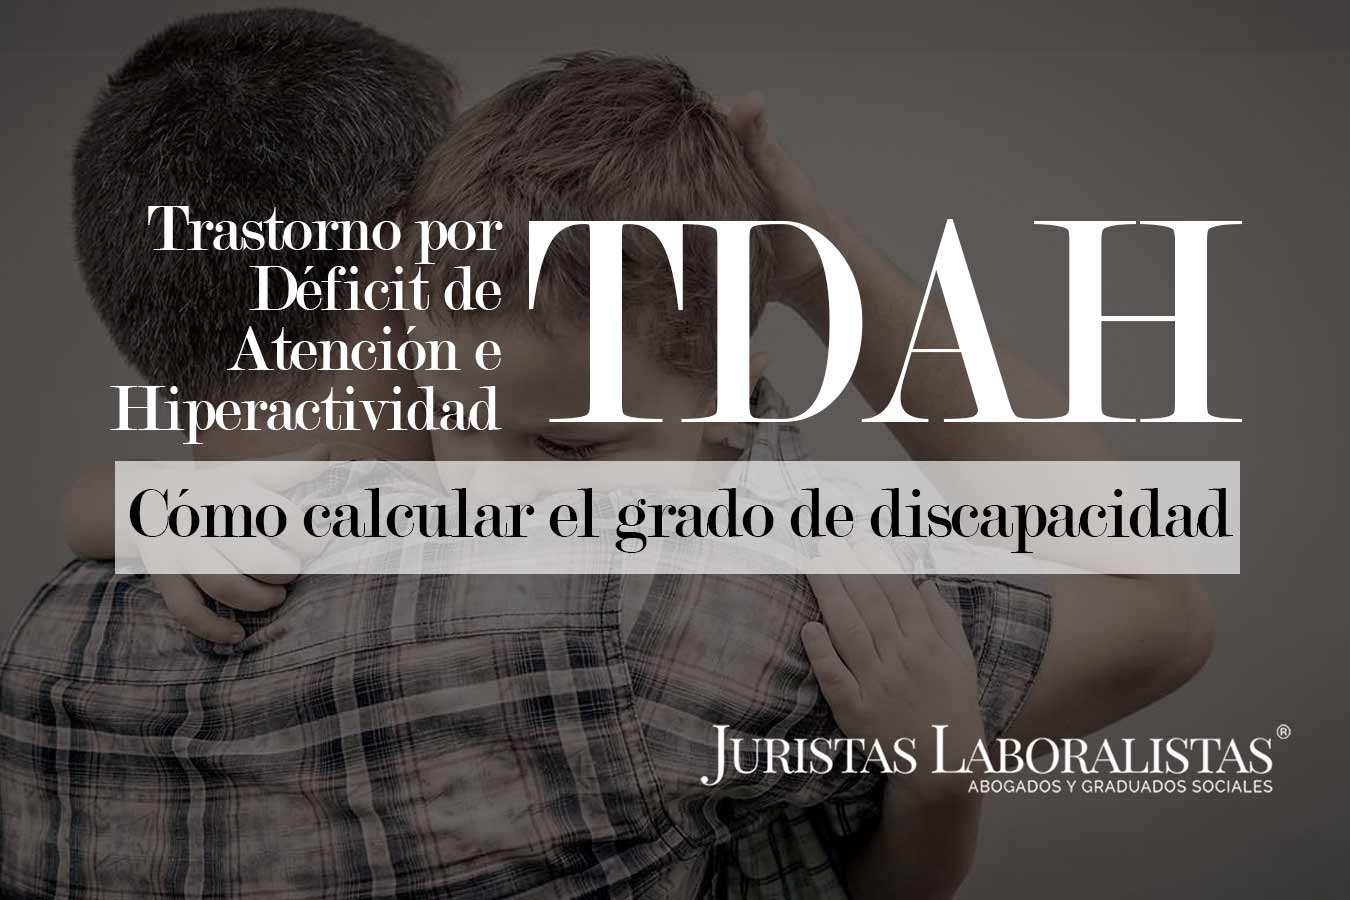 www.juristas-laboralistas.es